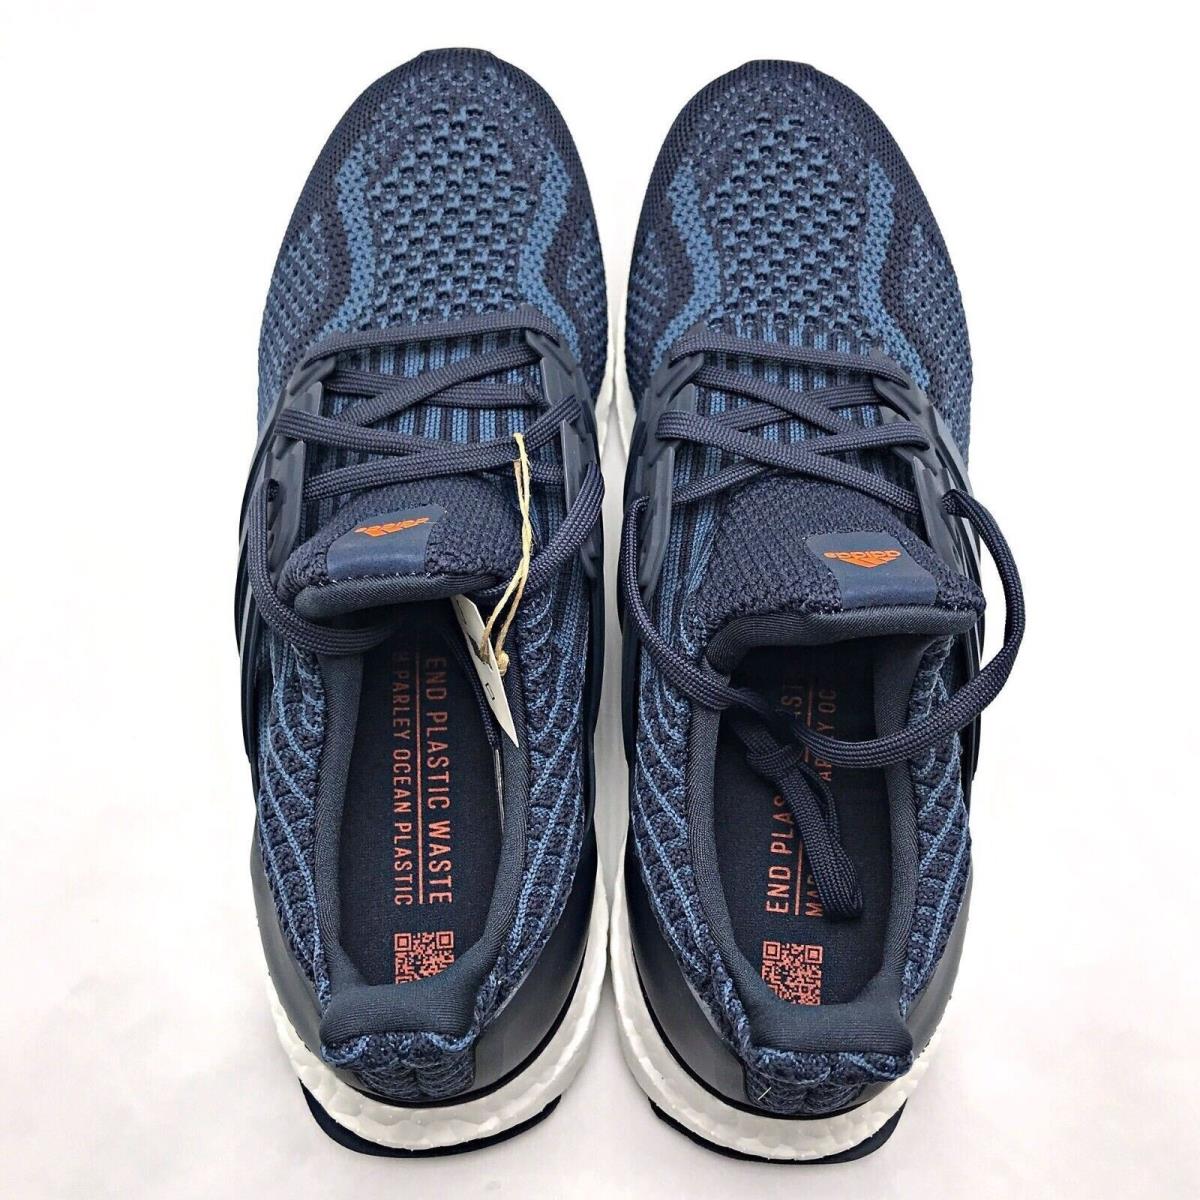 Adidas shoes UltraBoost - Blue 10